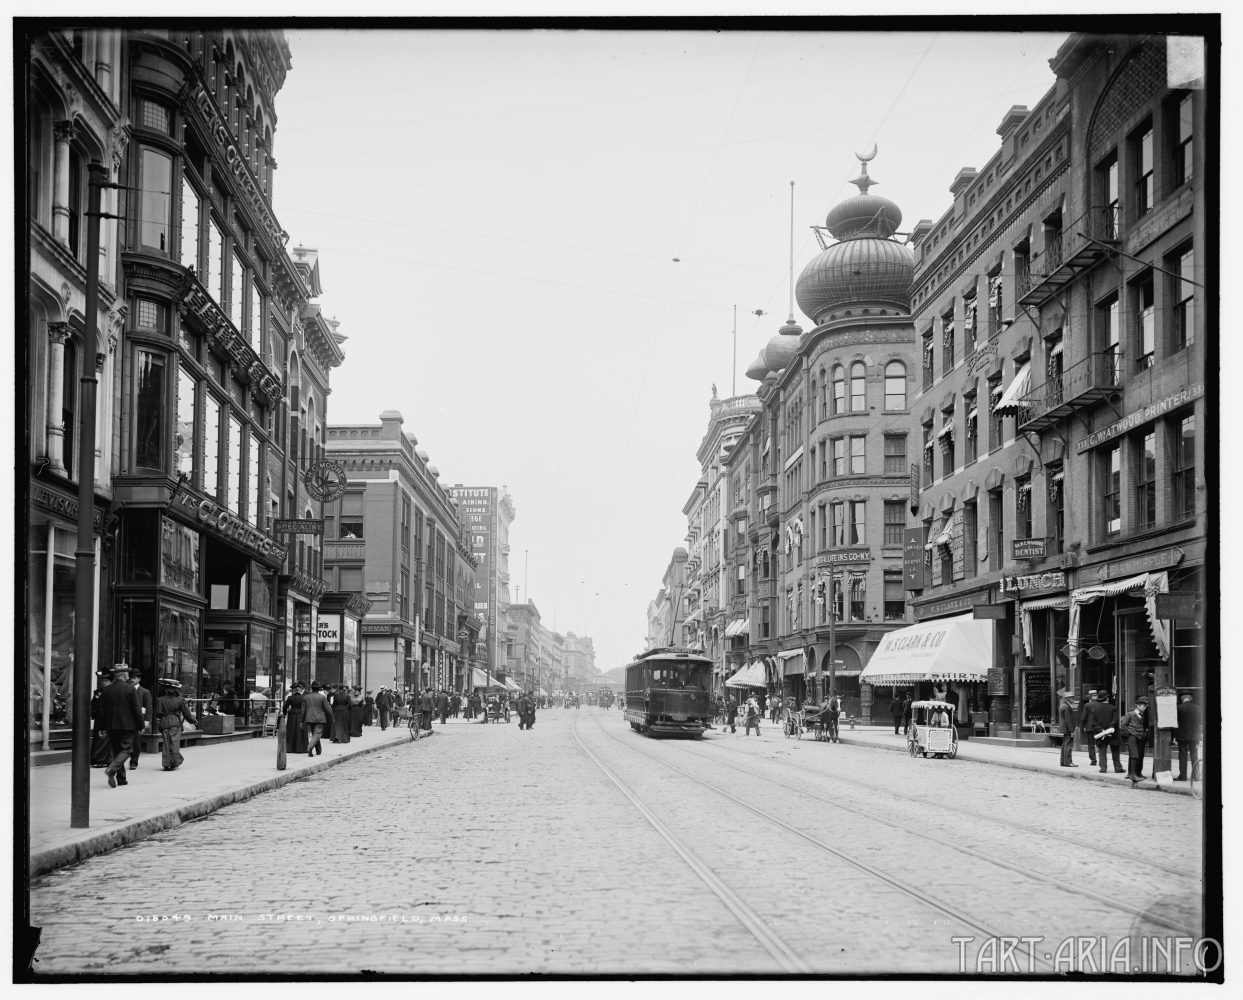 Главная улица города Springfield, штат Massachusetts, США (1905).